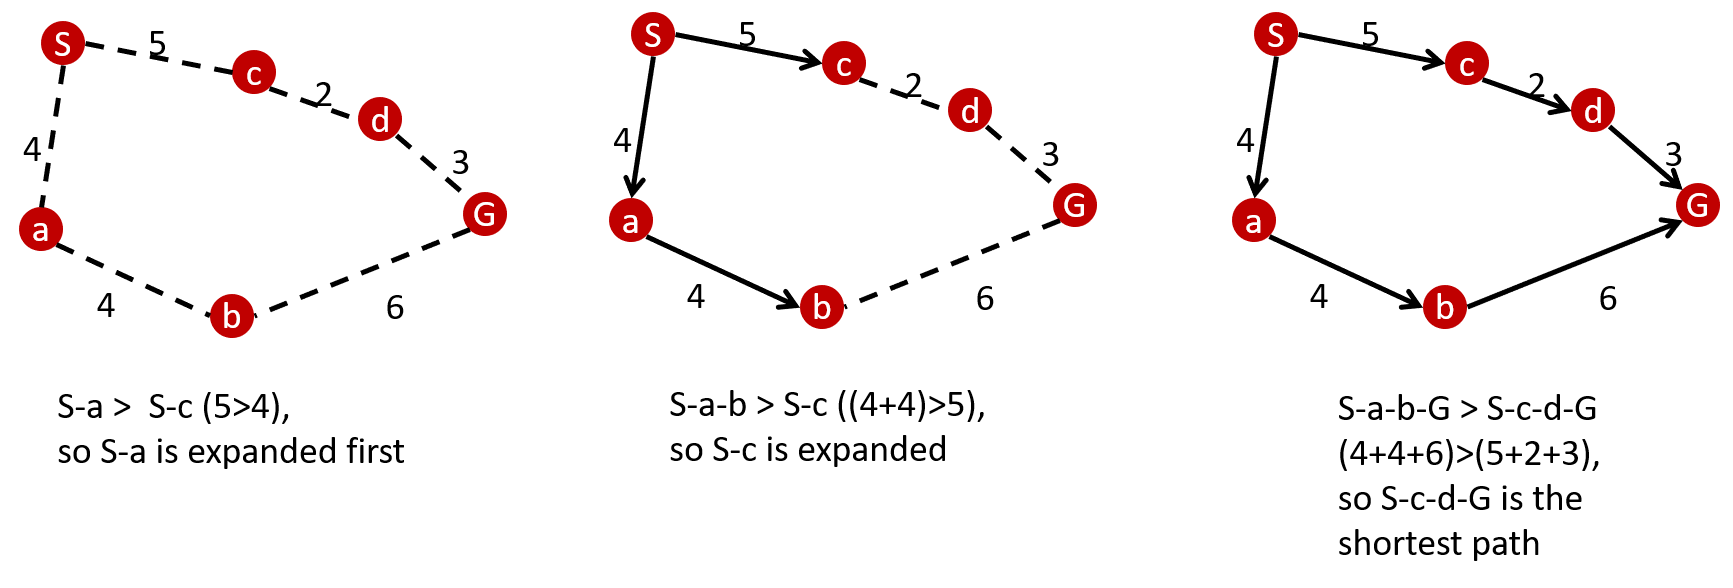 Figure 8: Dijkstra's algorithm for finding the shortest path